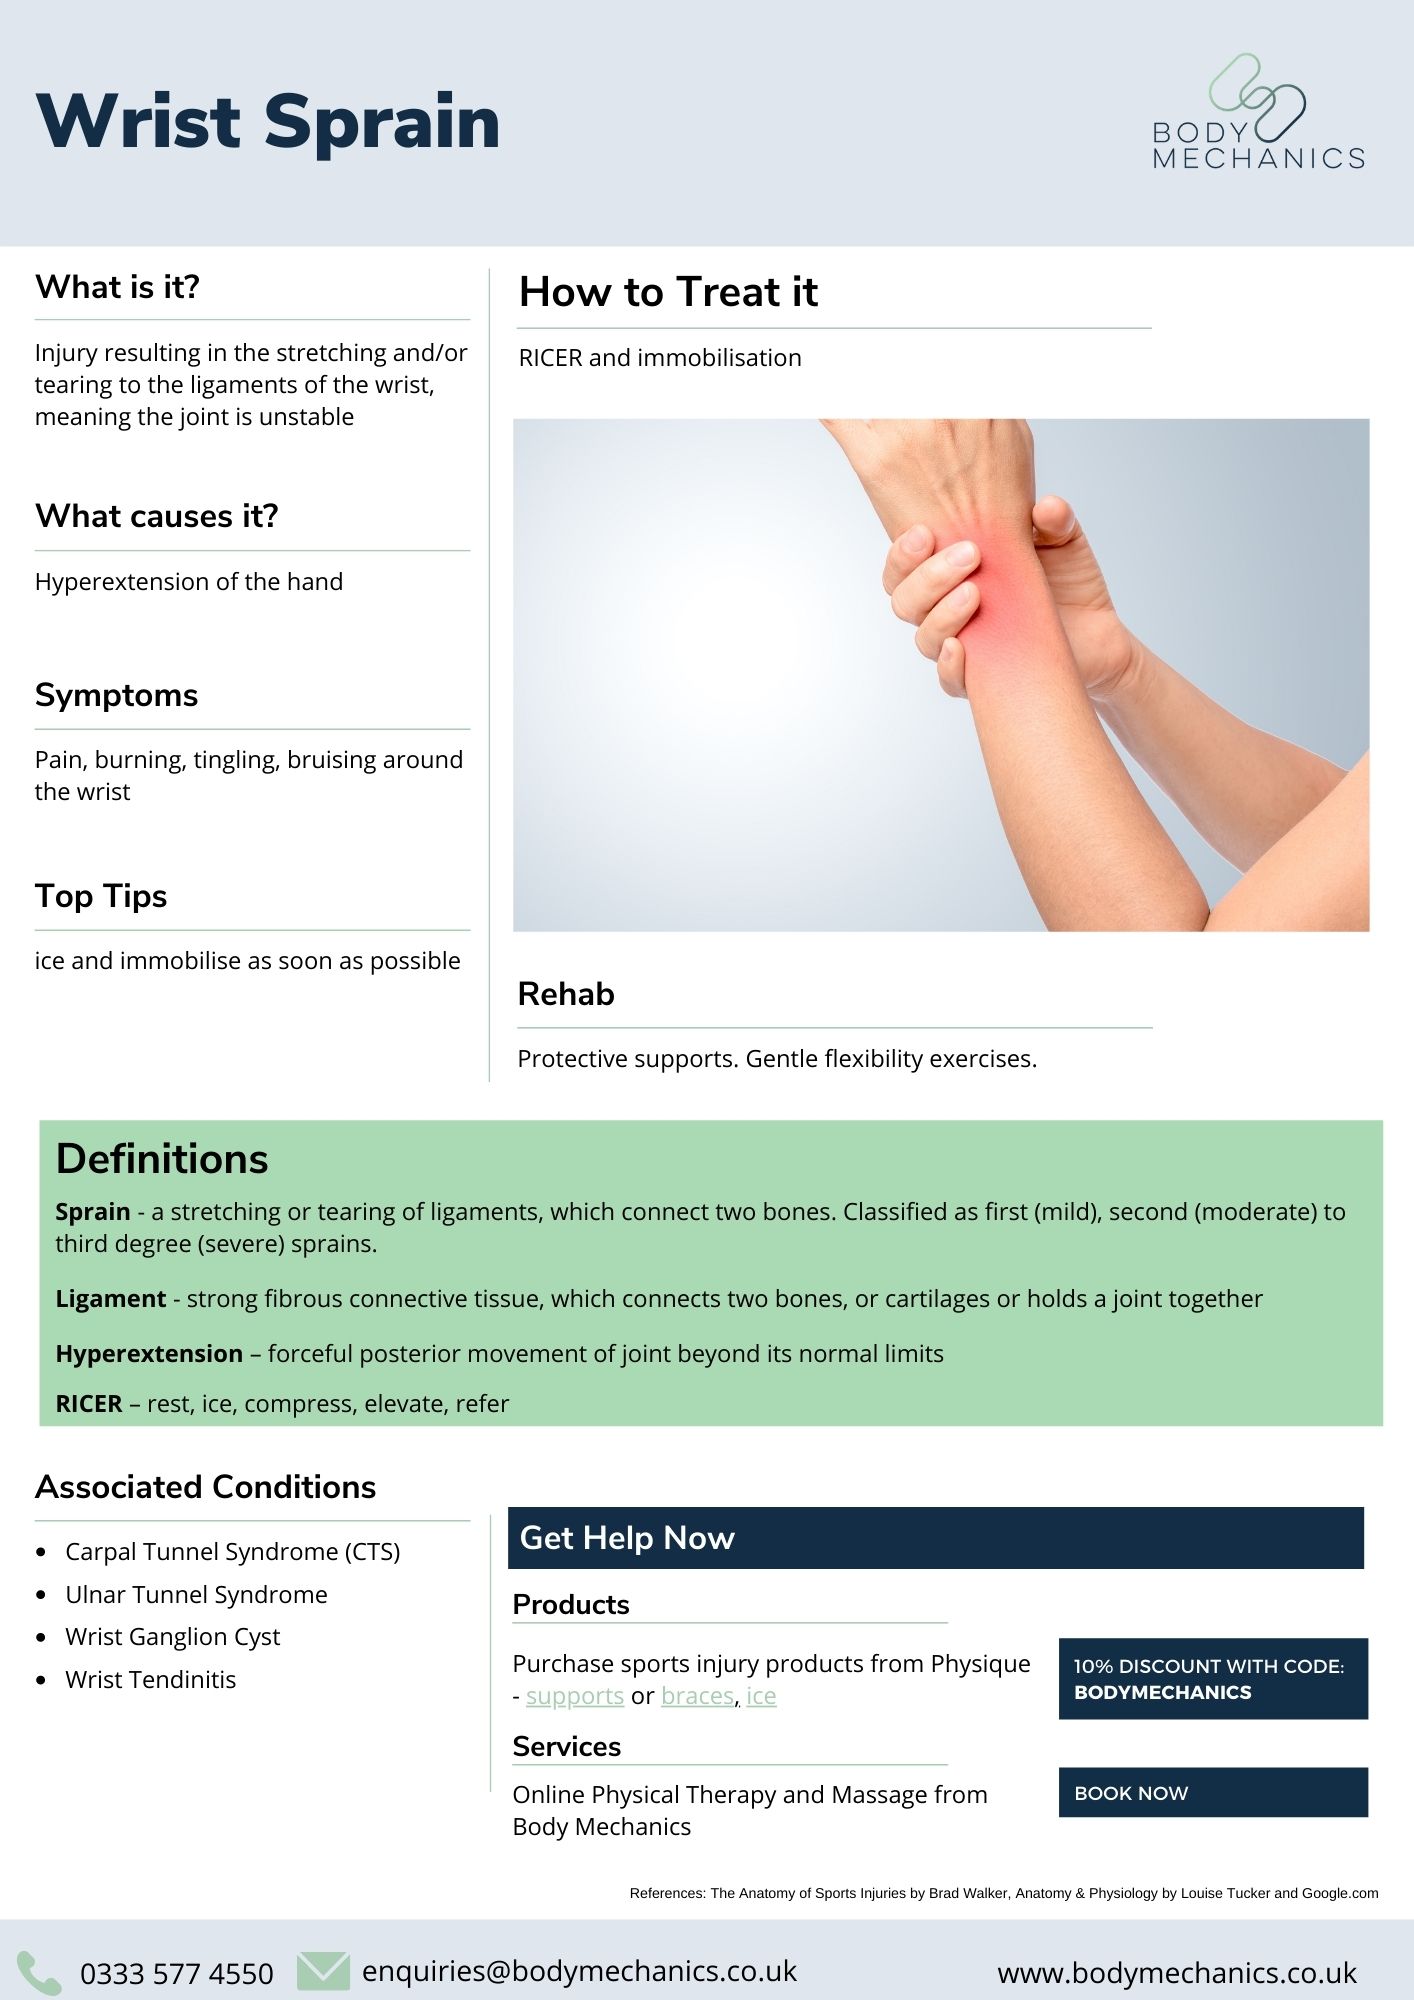 Wrist Sprain Infosheet